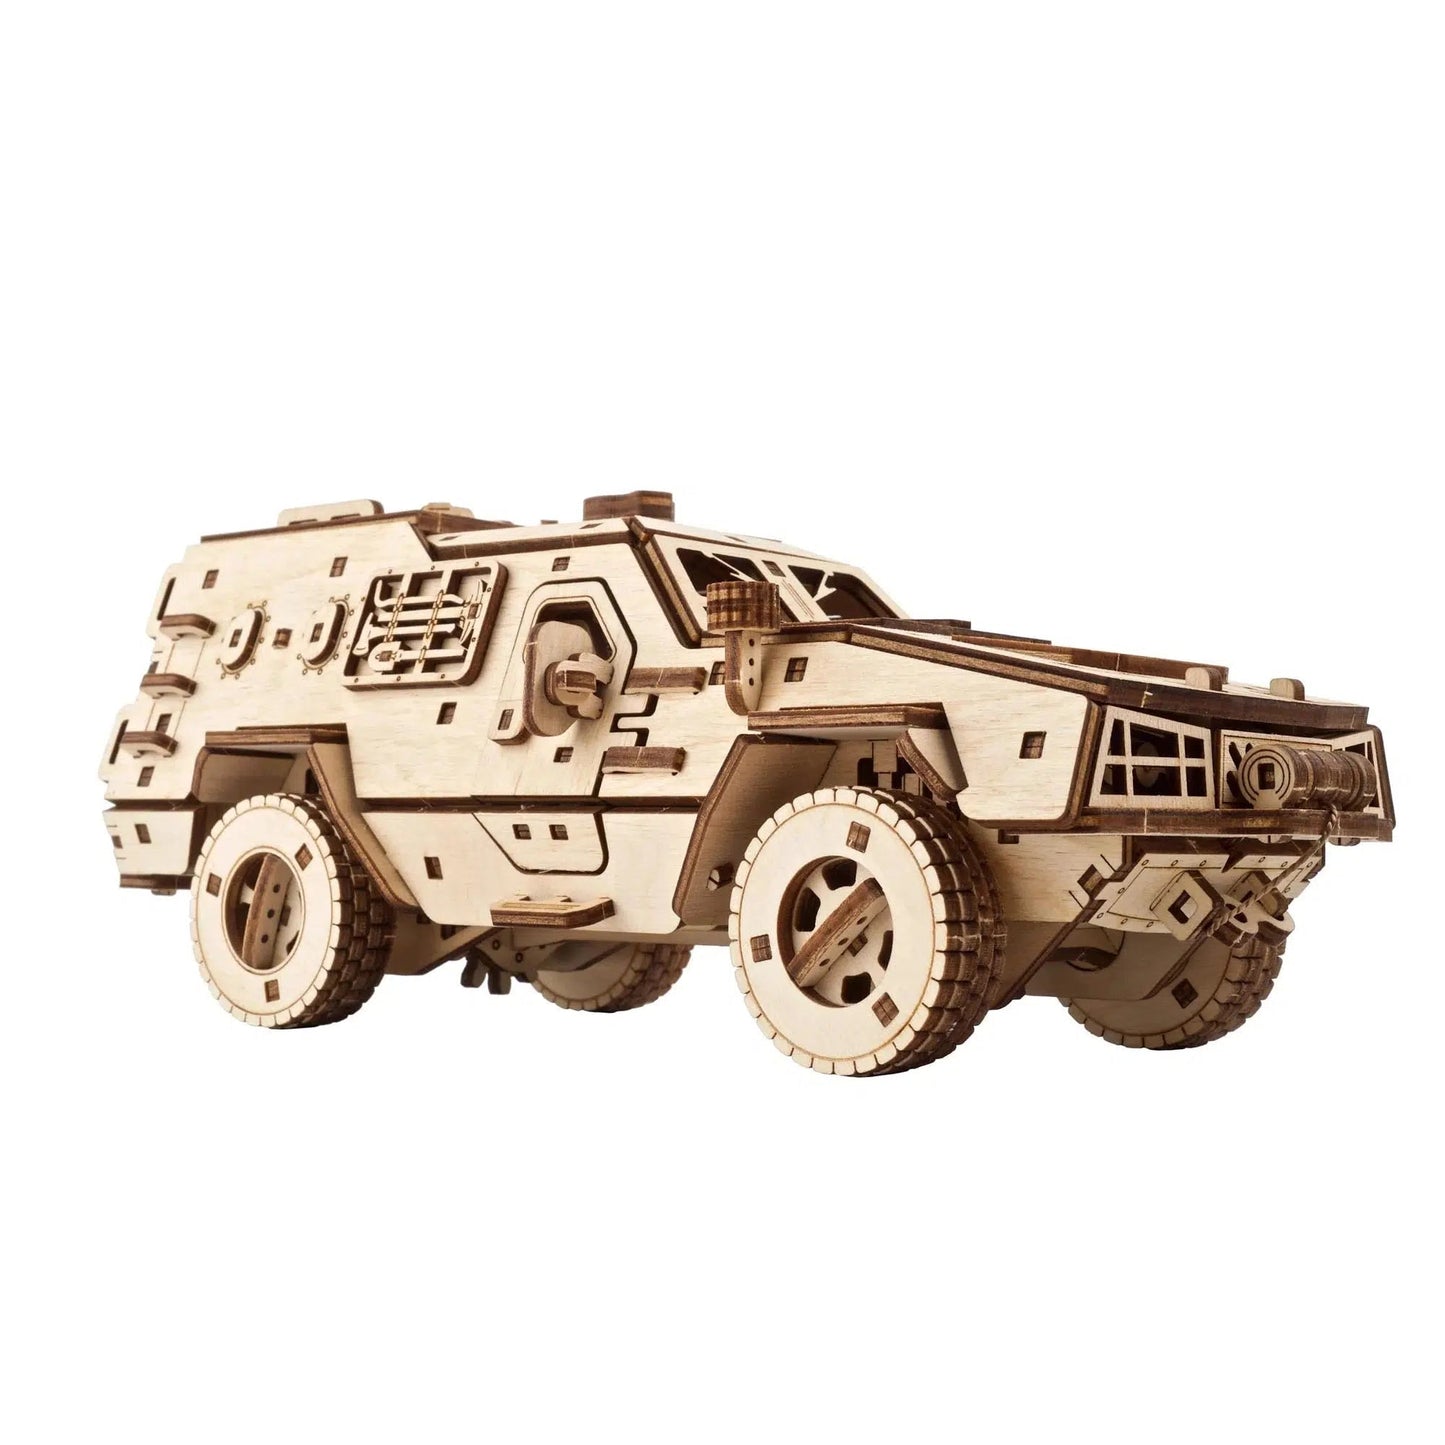 Dozor-B Combat Vehicle 3D Wood Model Kit UGEARS